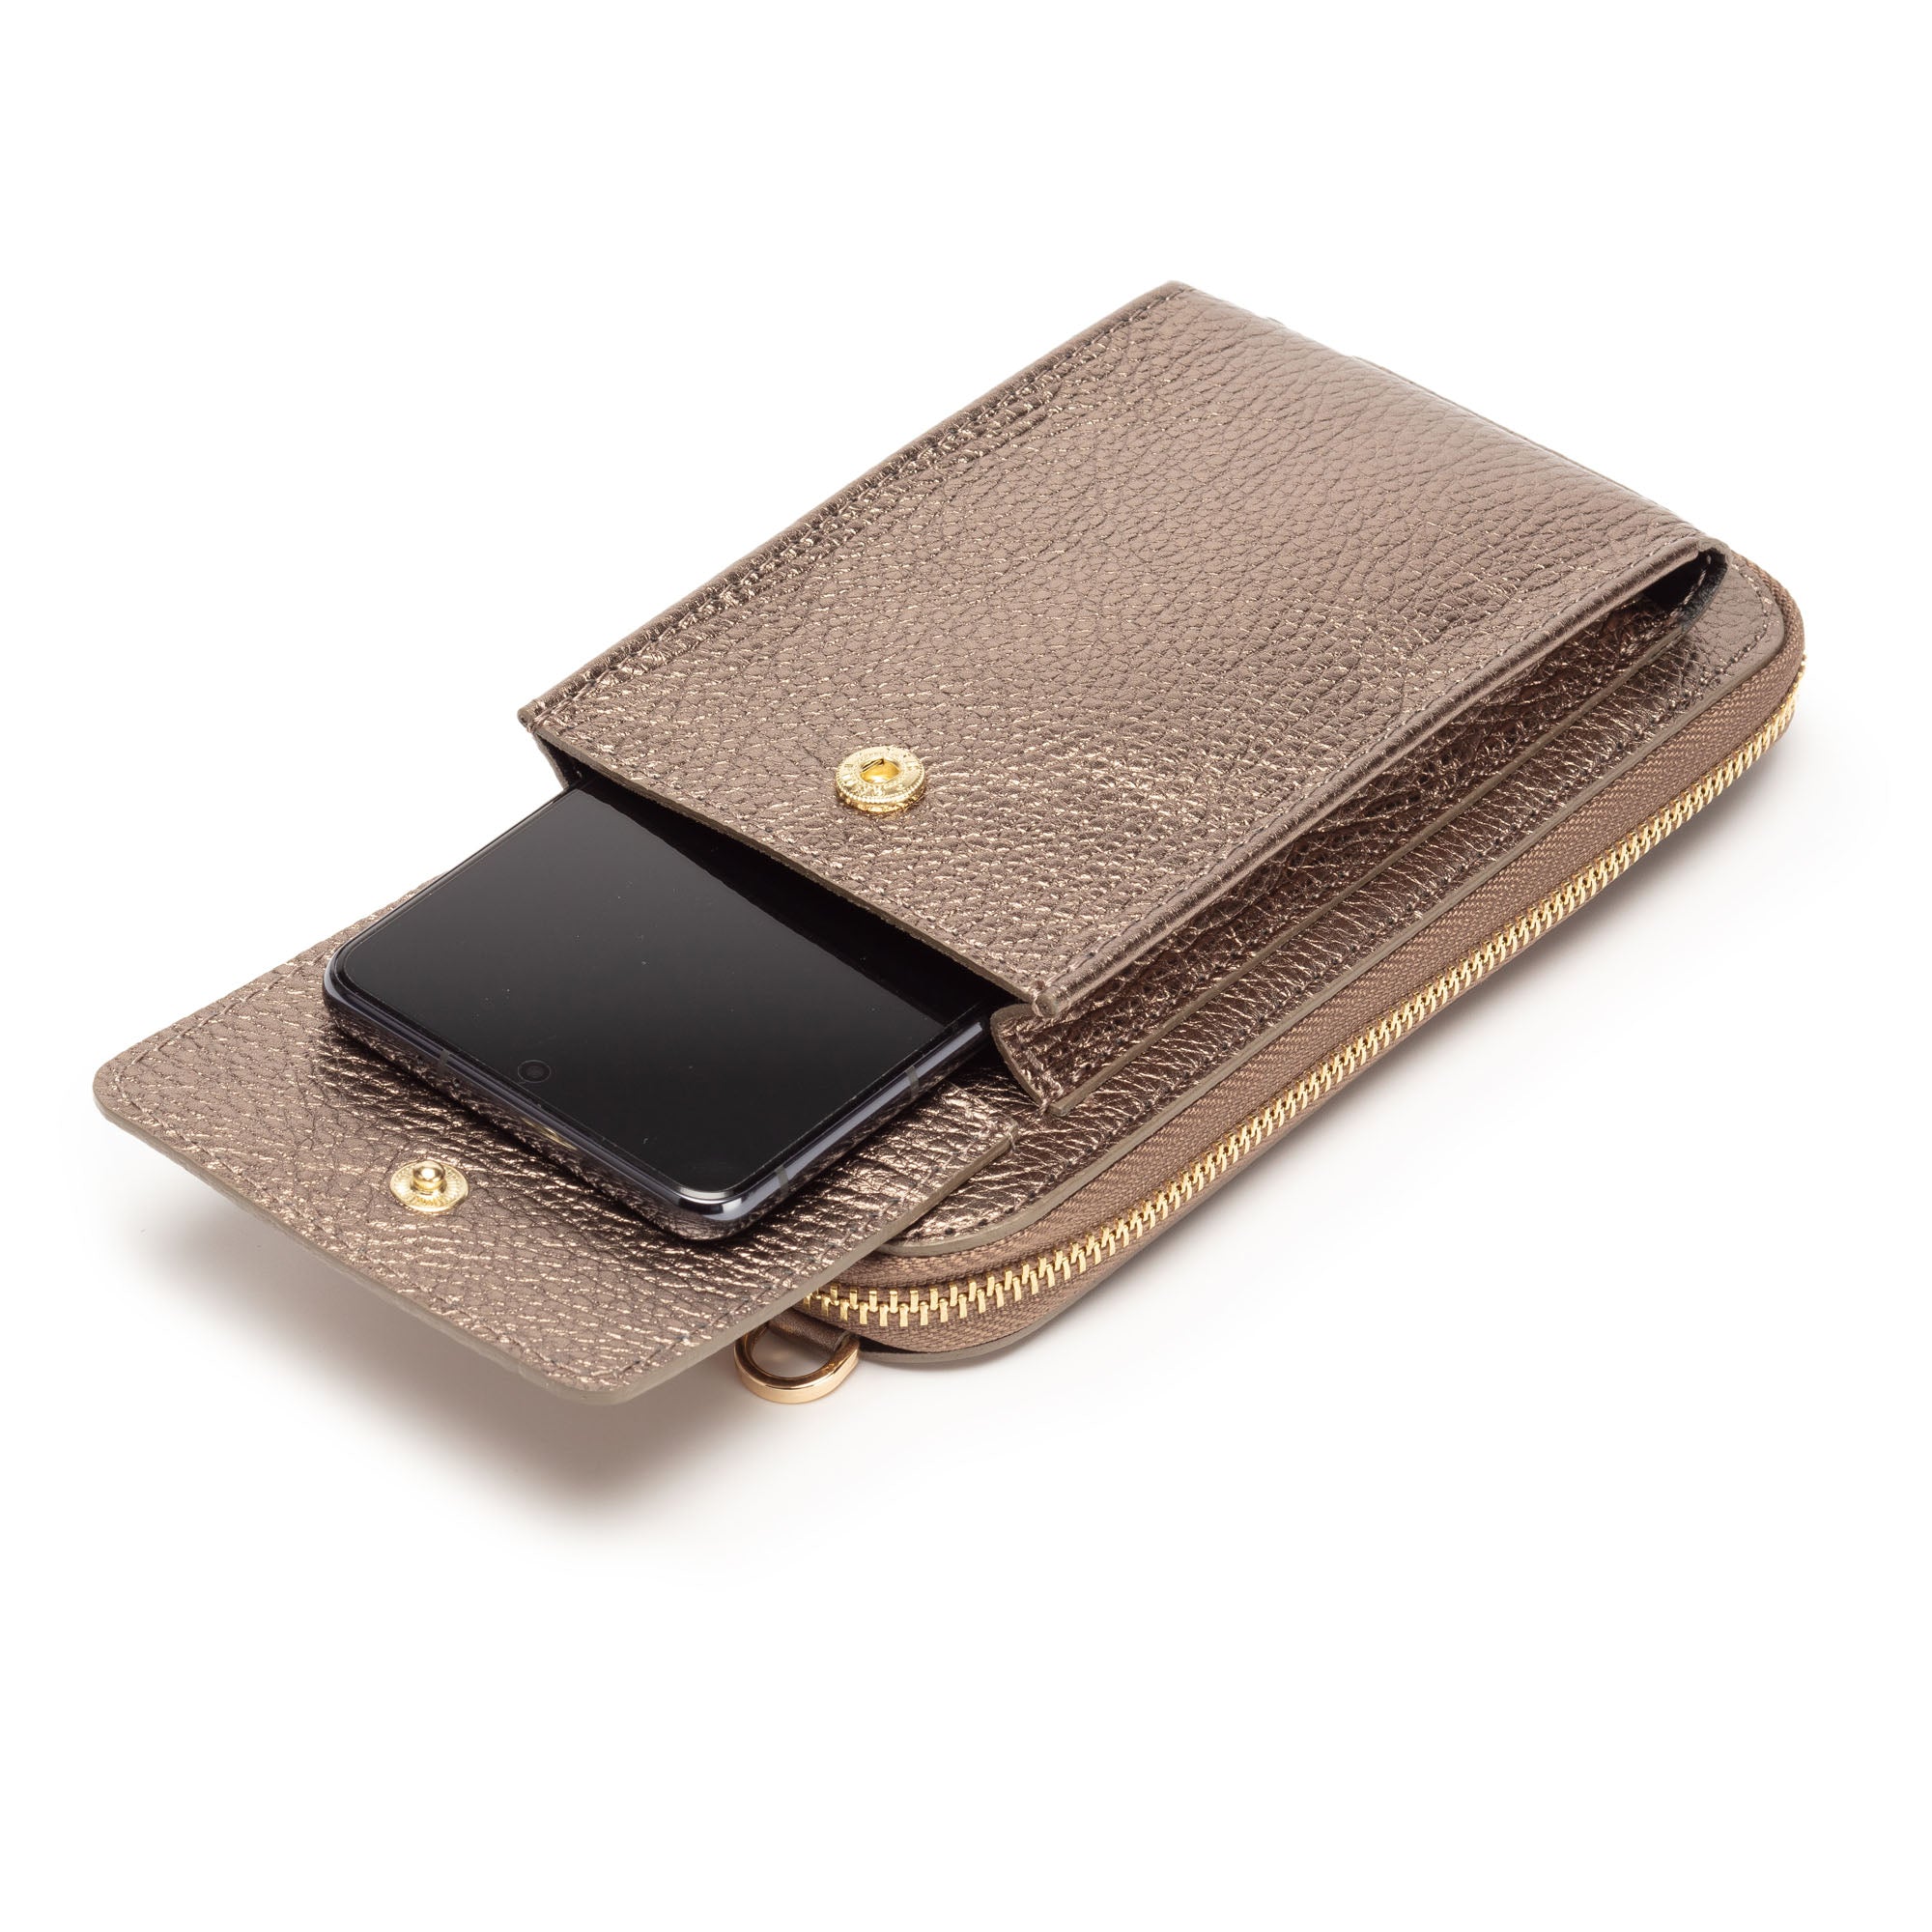 Phonebag Bronze (Black/Gold/White strap)